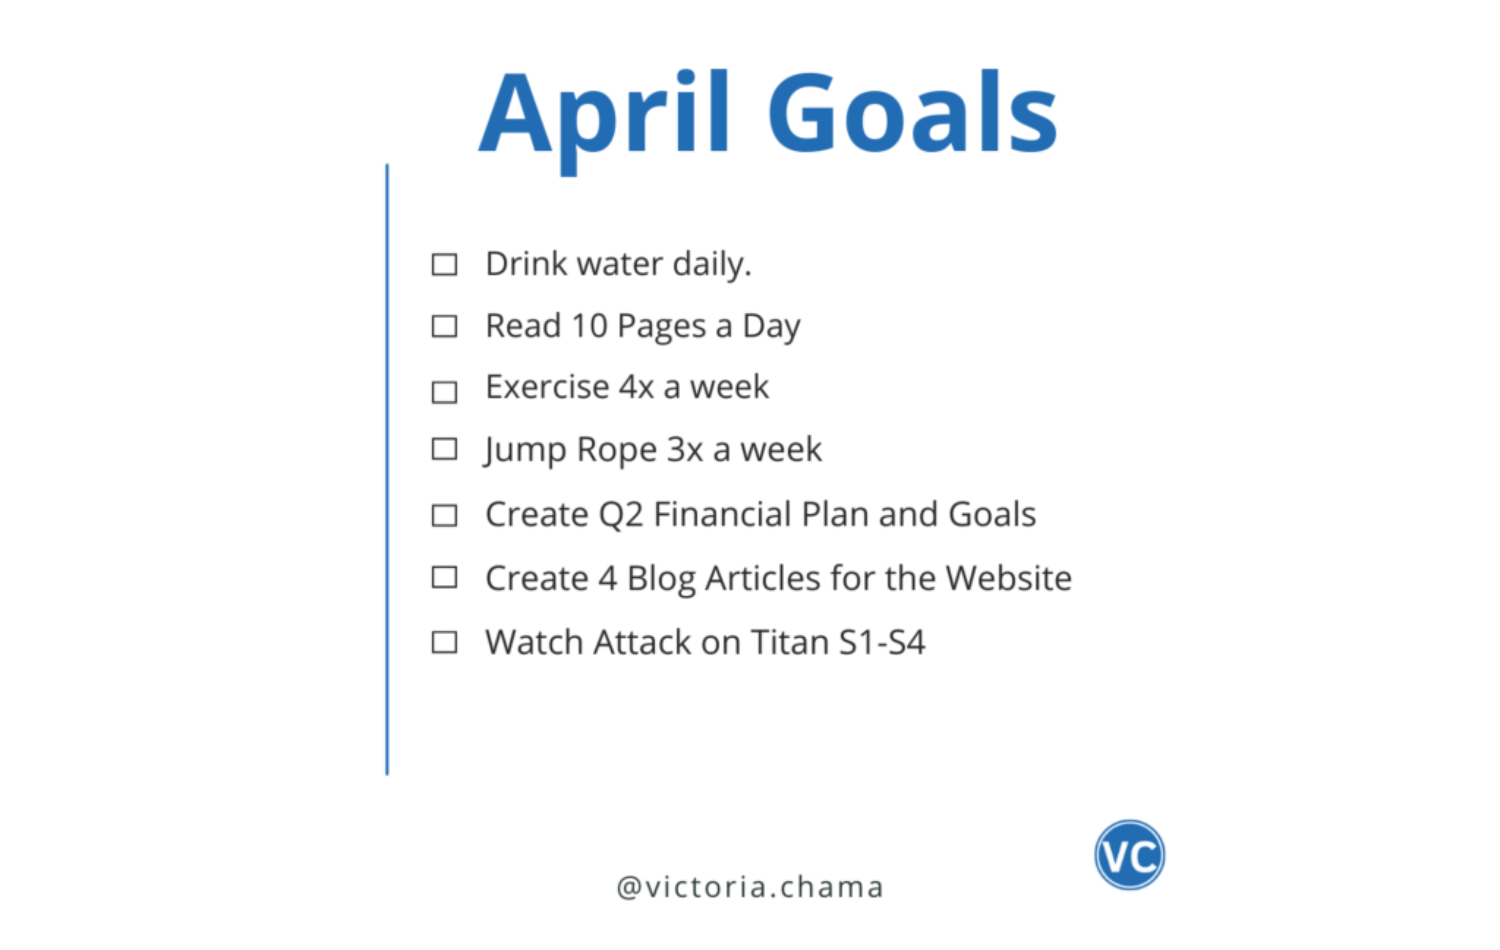 April Monthly Goals - IG (1500 × 950 px)